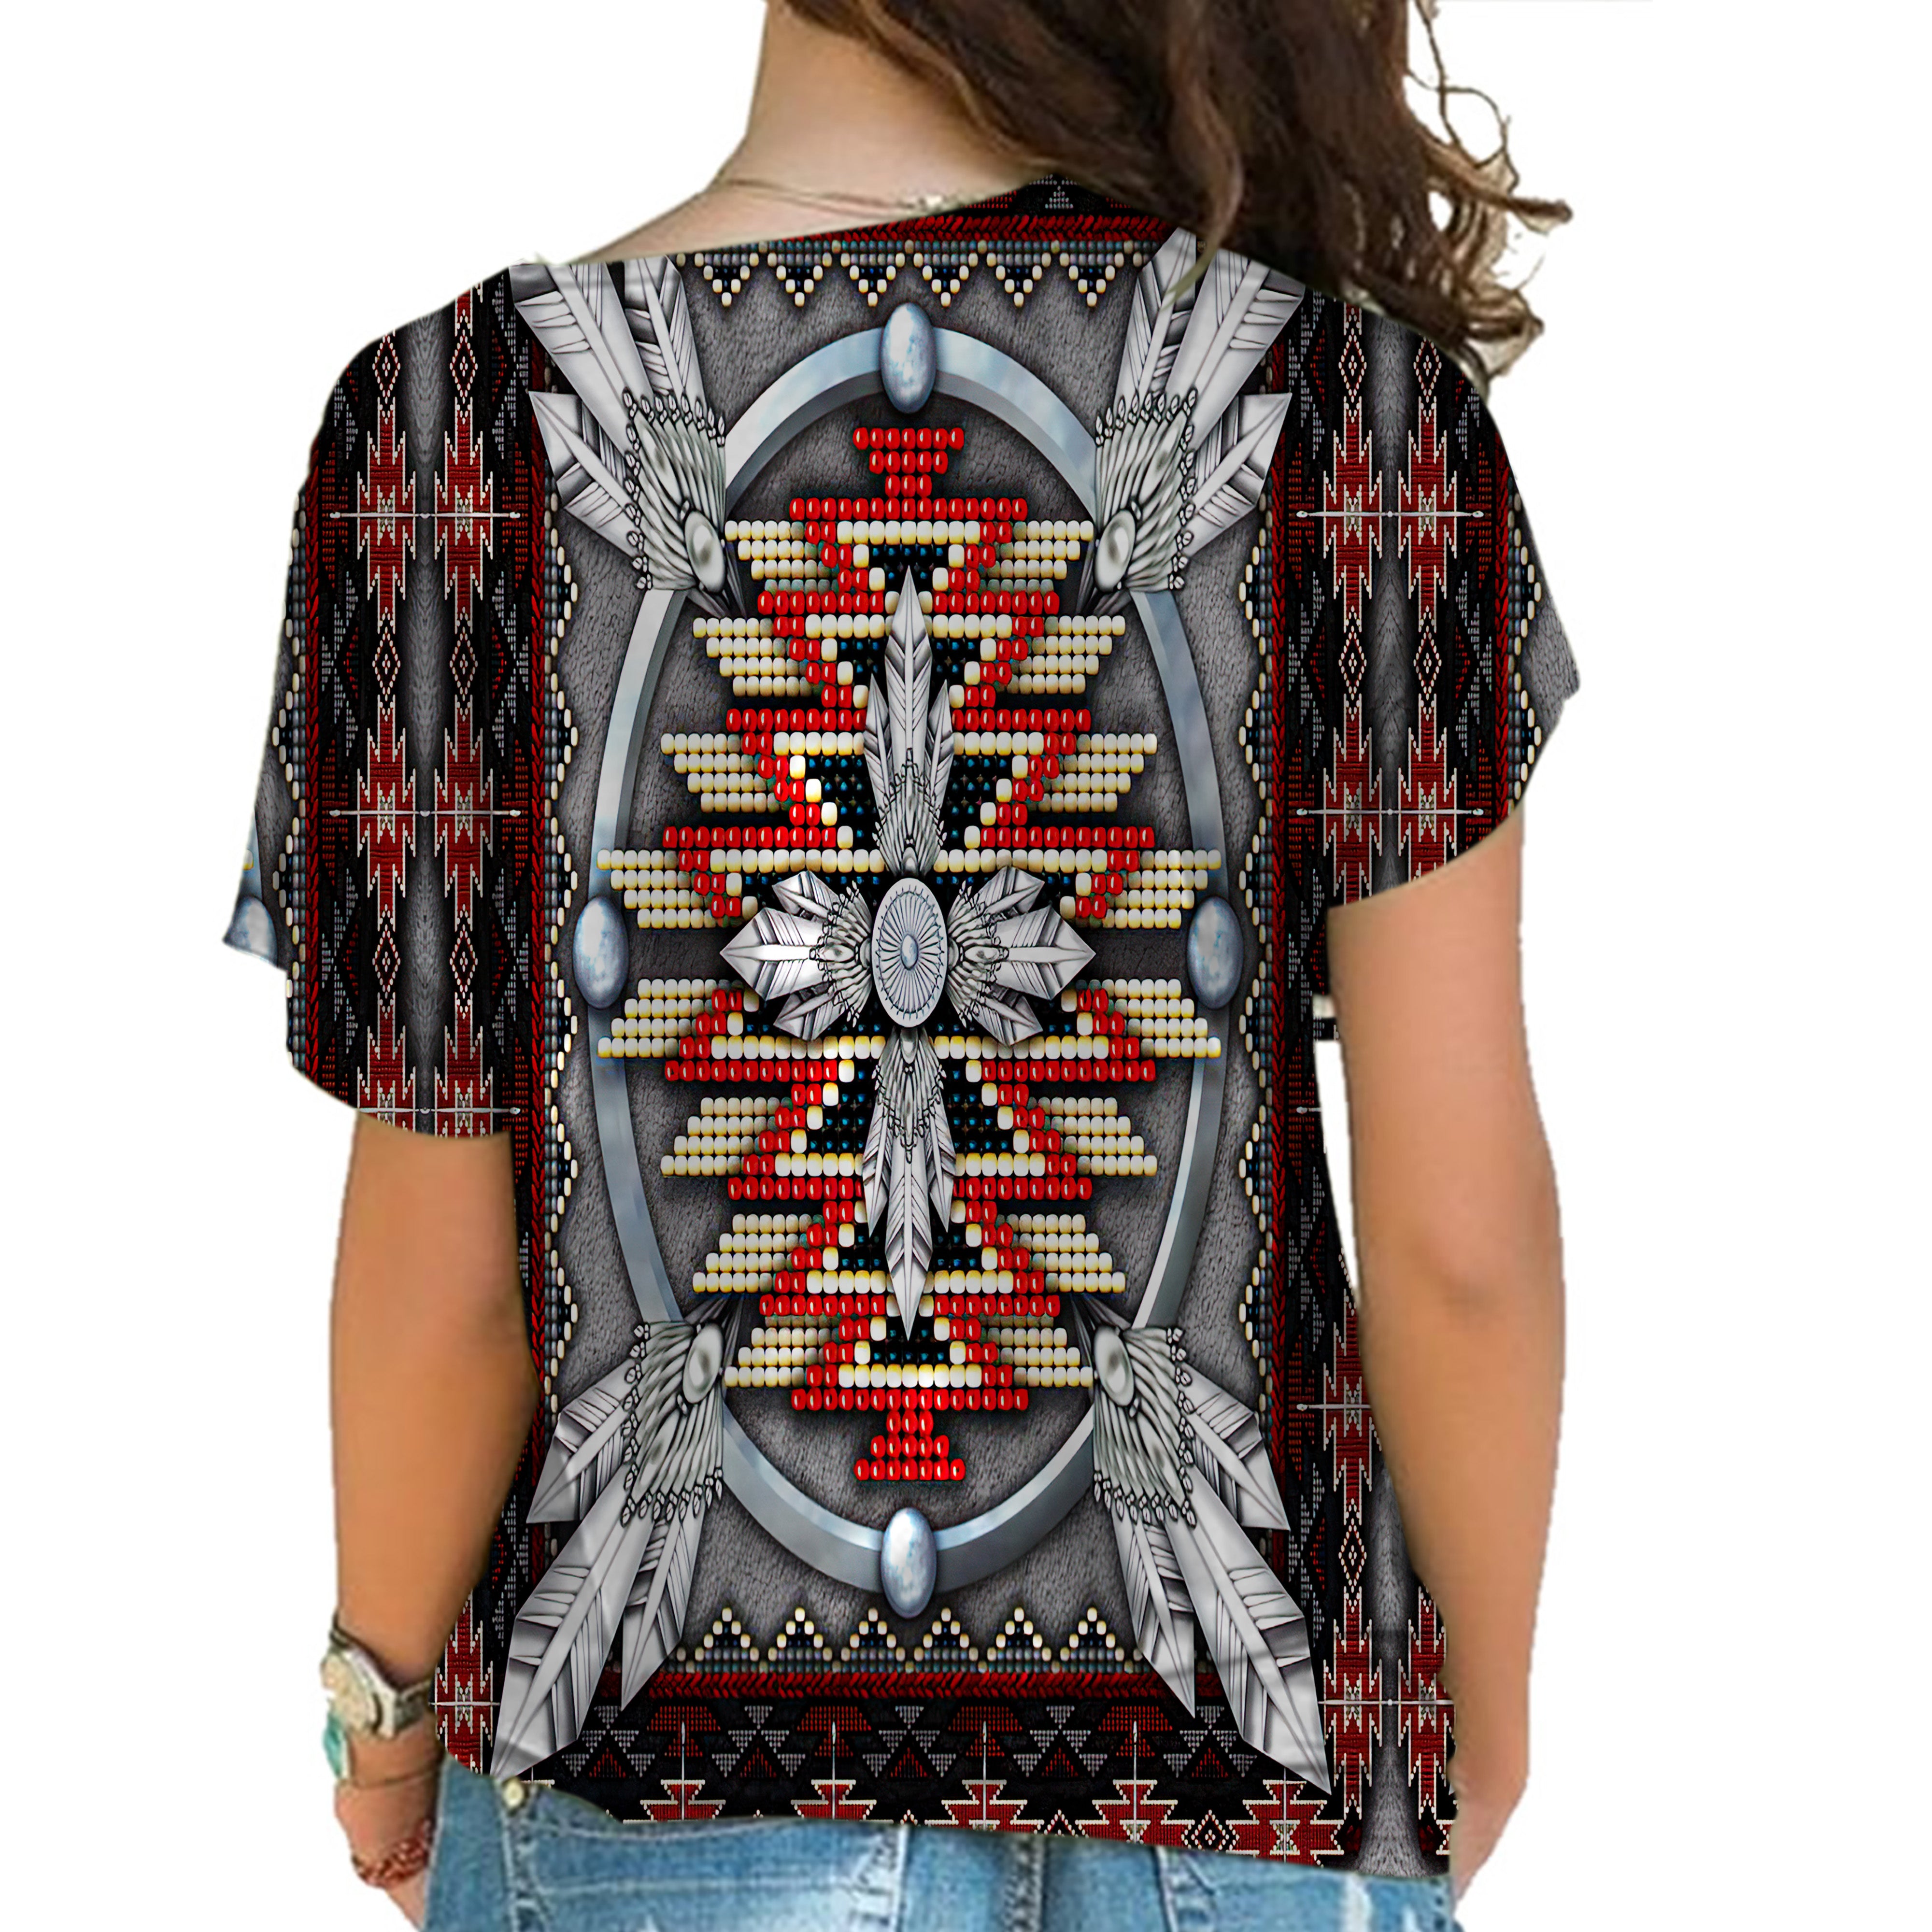 Powwow Store native american cross shoulder shirt 1130